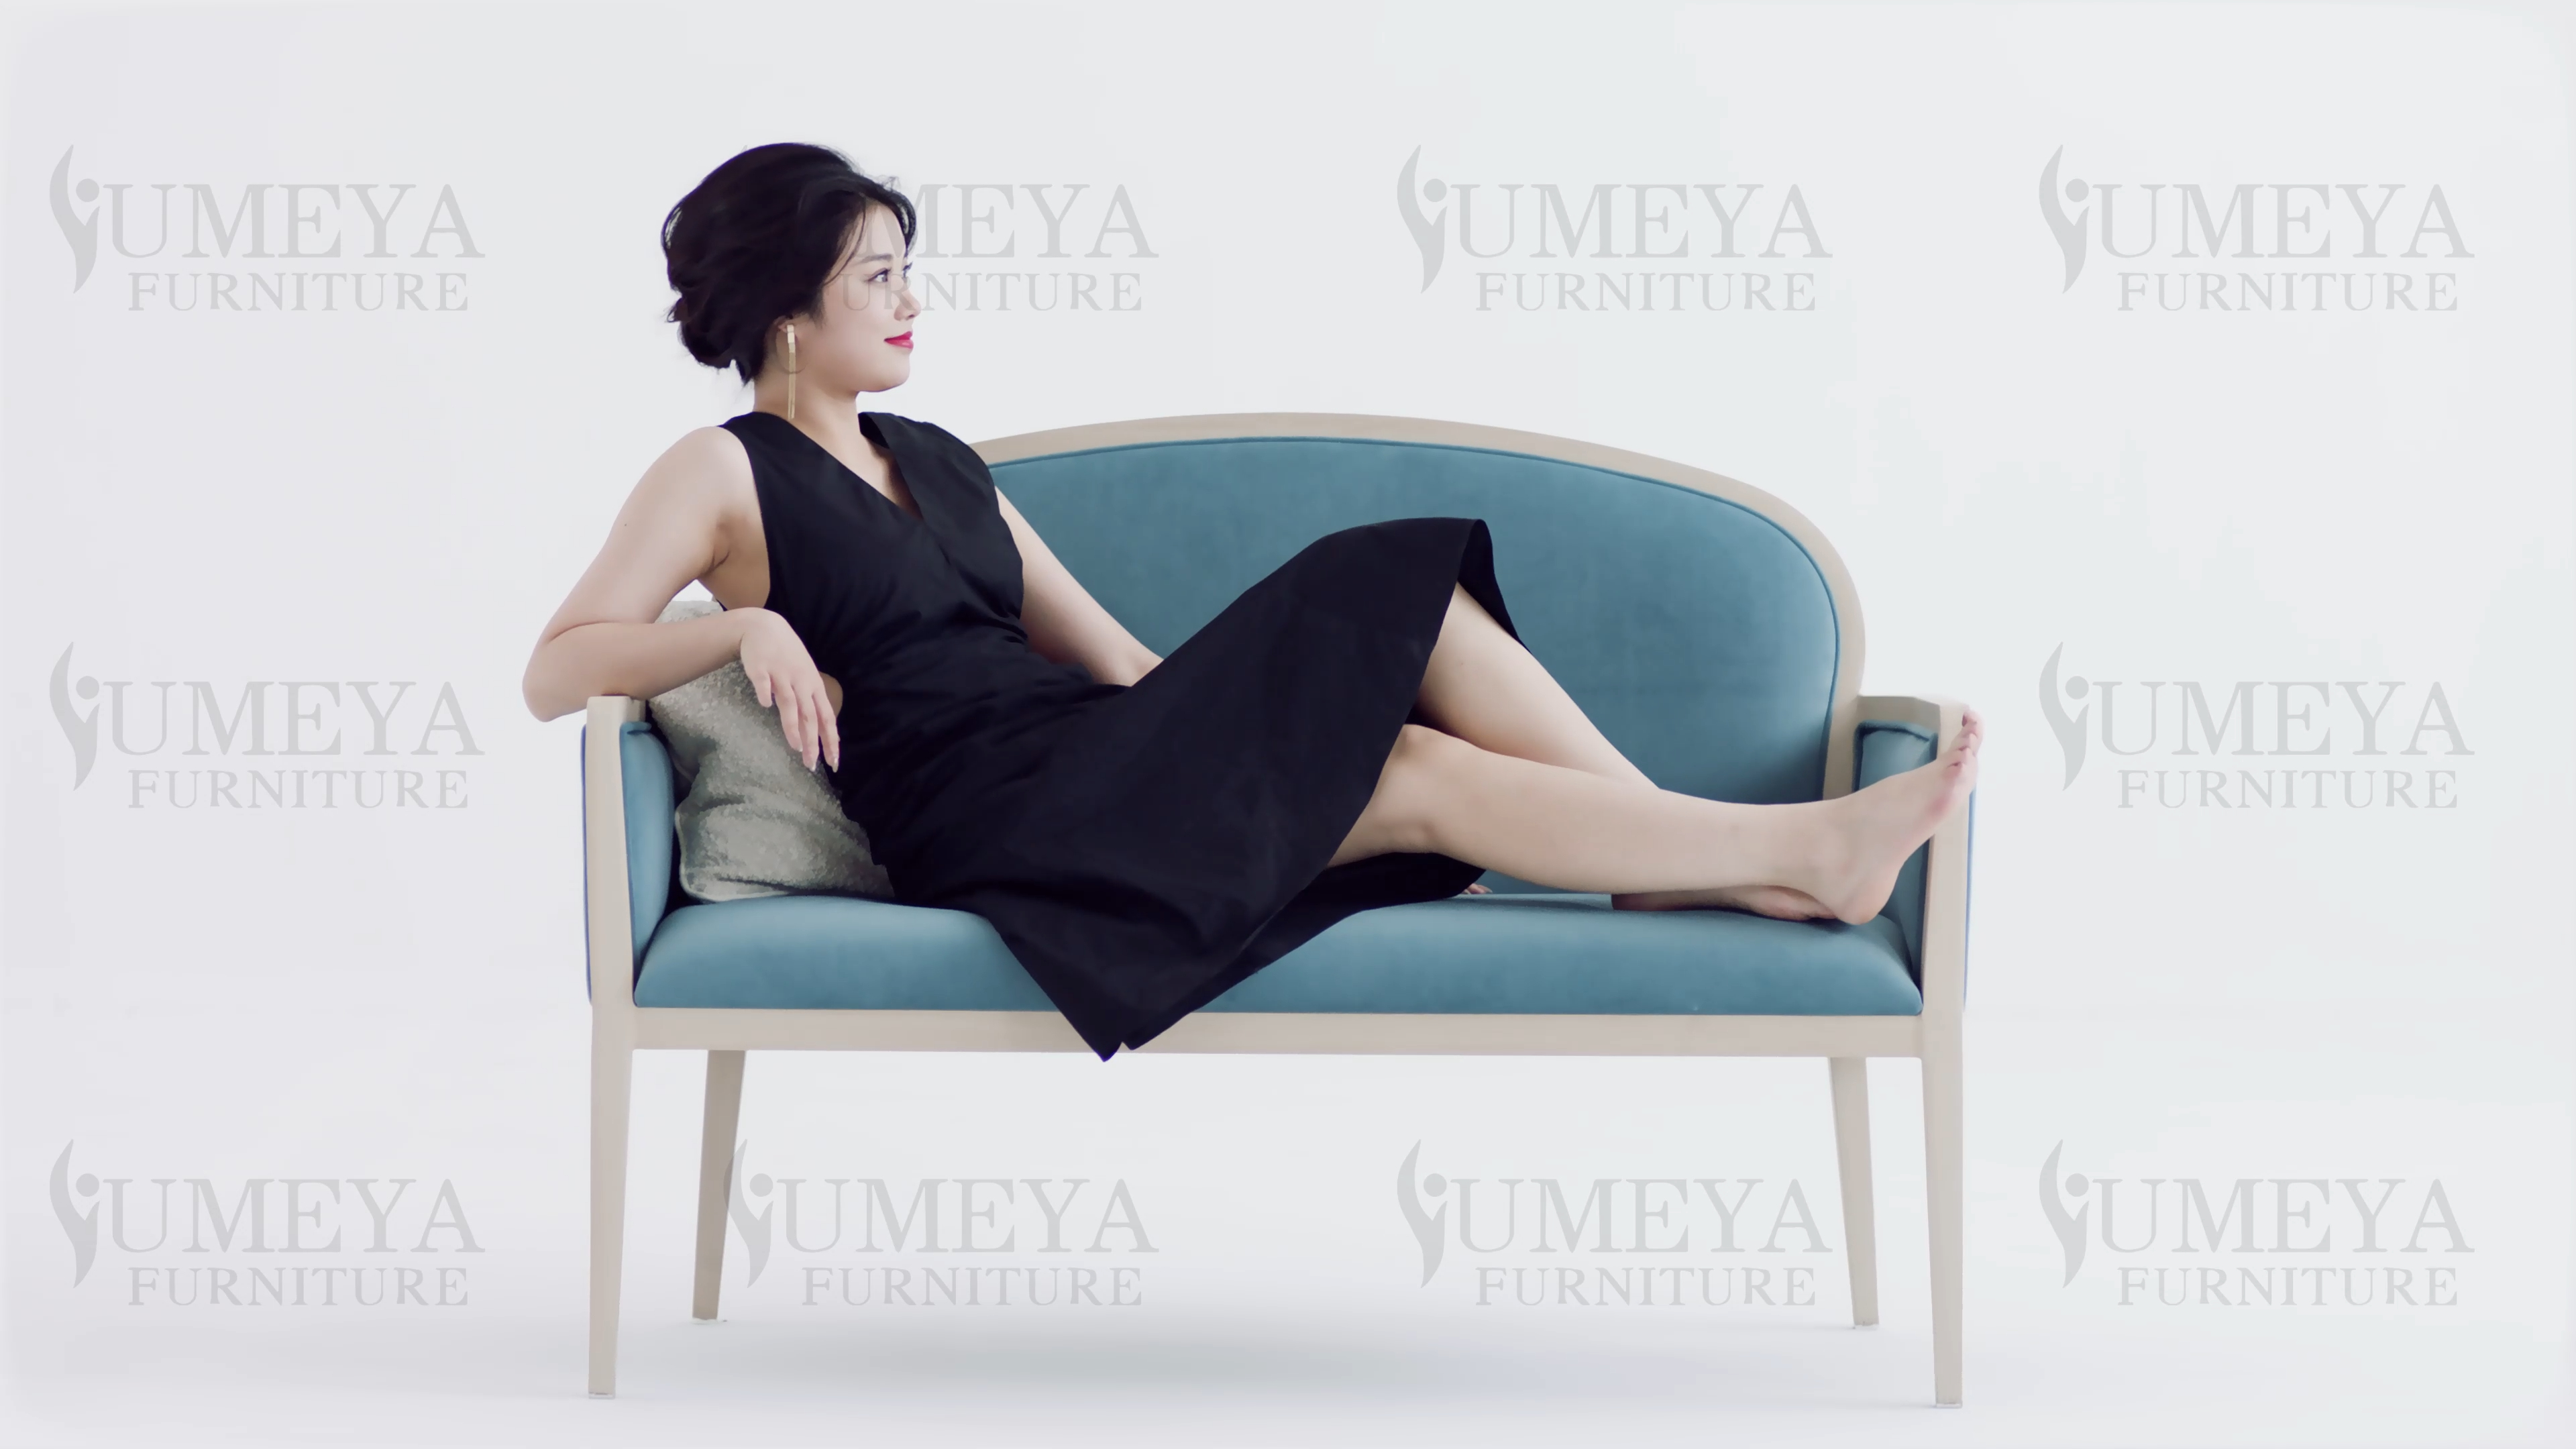 kitchen stool for seniors | Yumeya Furniture